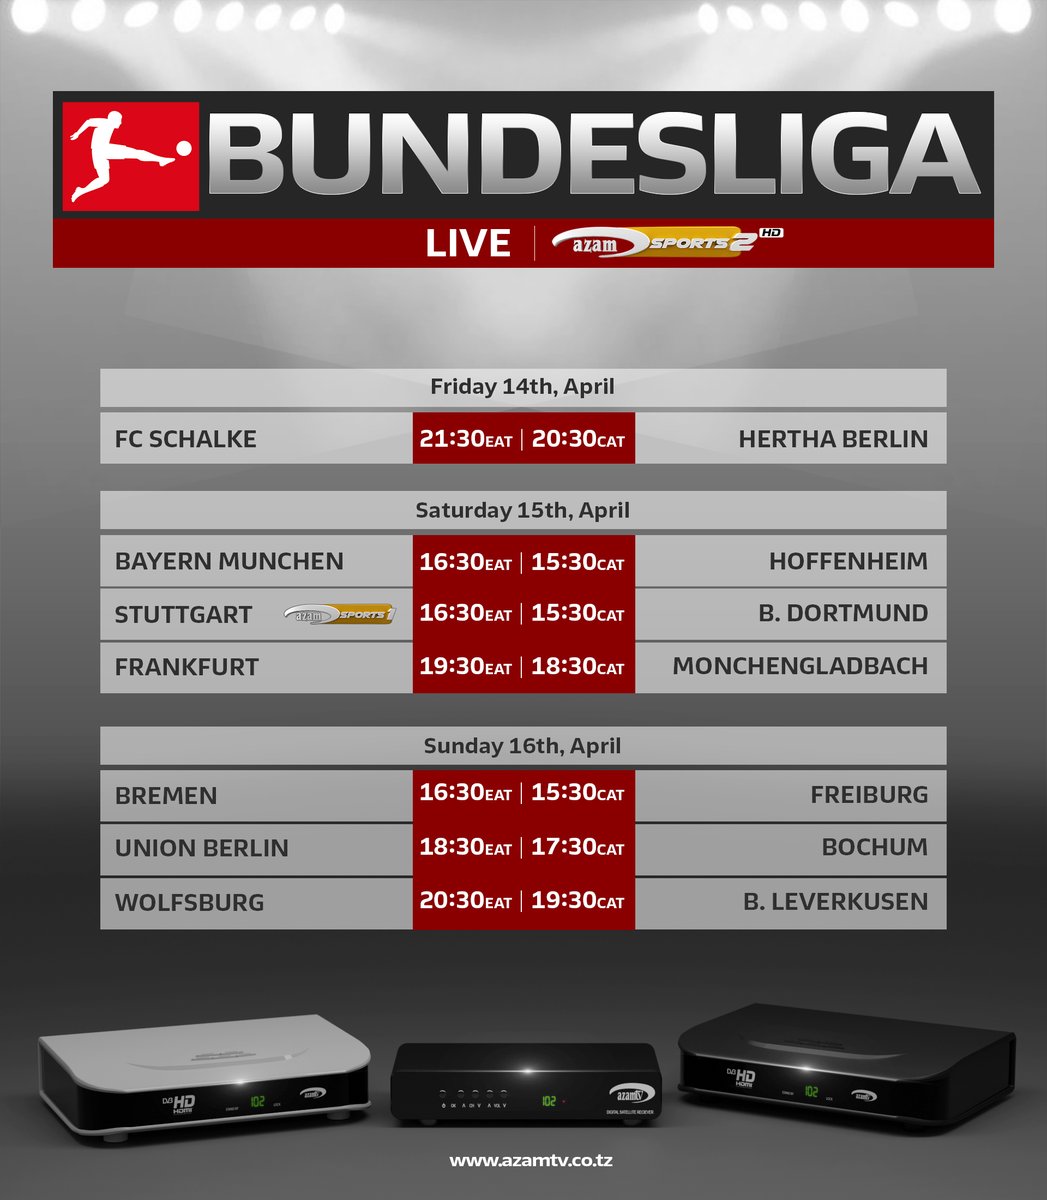 Enjoy all the exciting #Bundesliga Live Football matches on #AzamSports2HD Channel 106 this Sunday on #AzamTV decoder.
#azamtvzw #entertainment4everybody